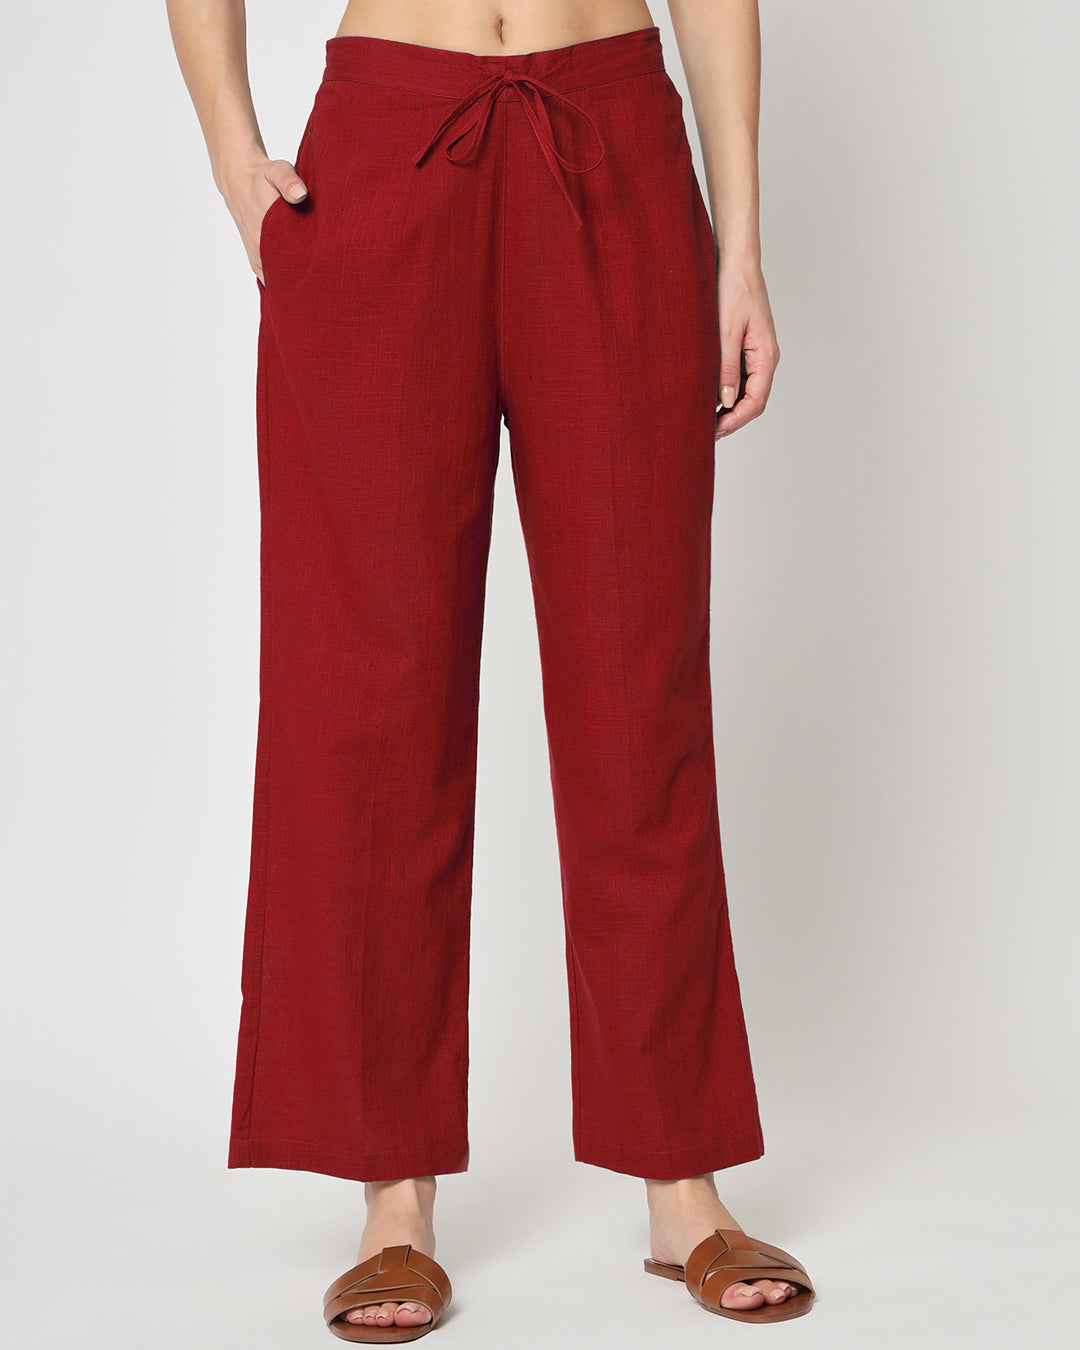 Combo: Aurora Purple & Classic Red Straight Pants- Set of 2